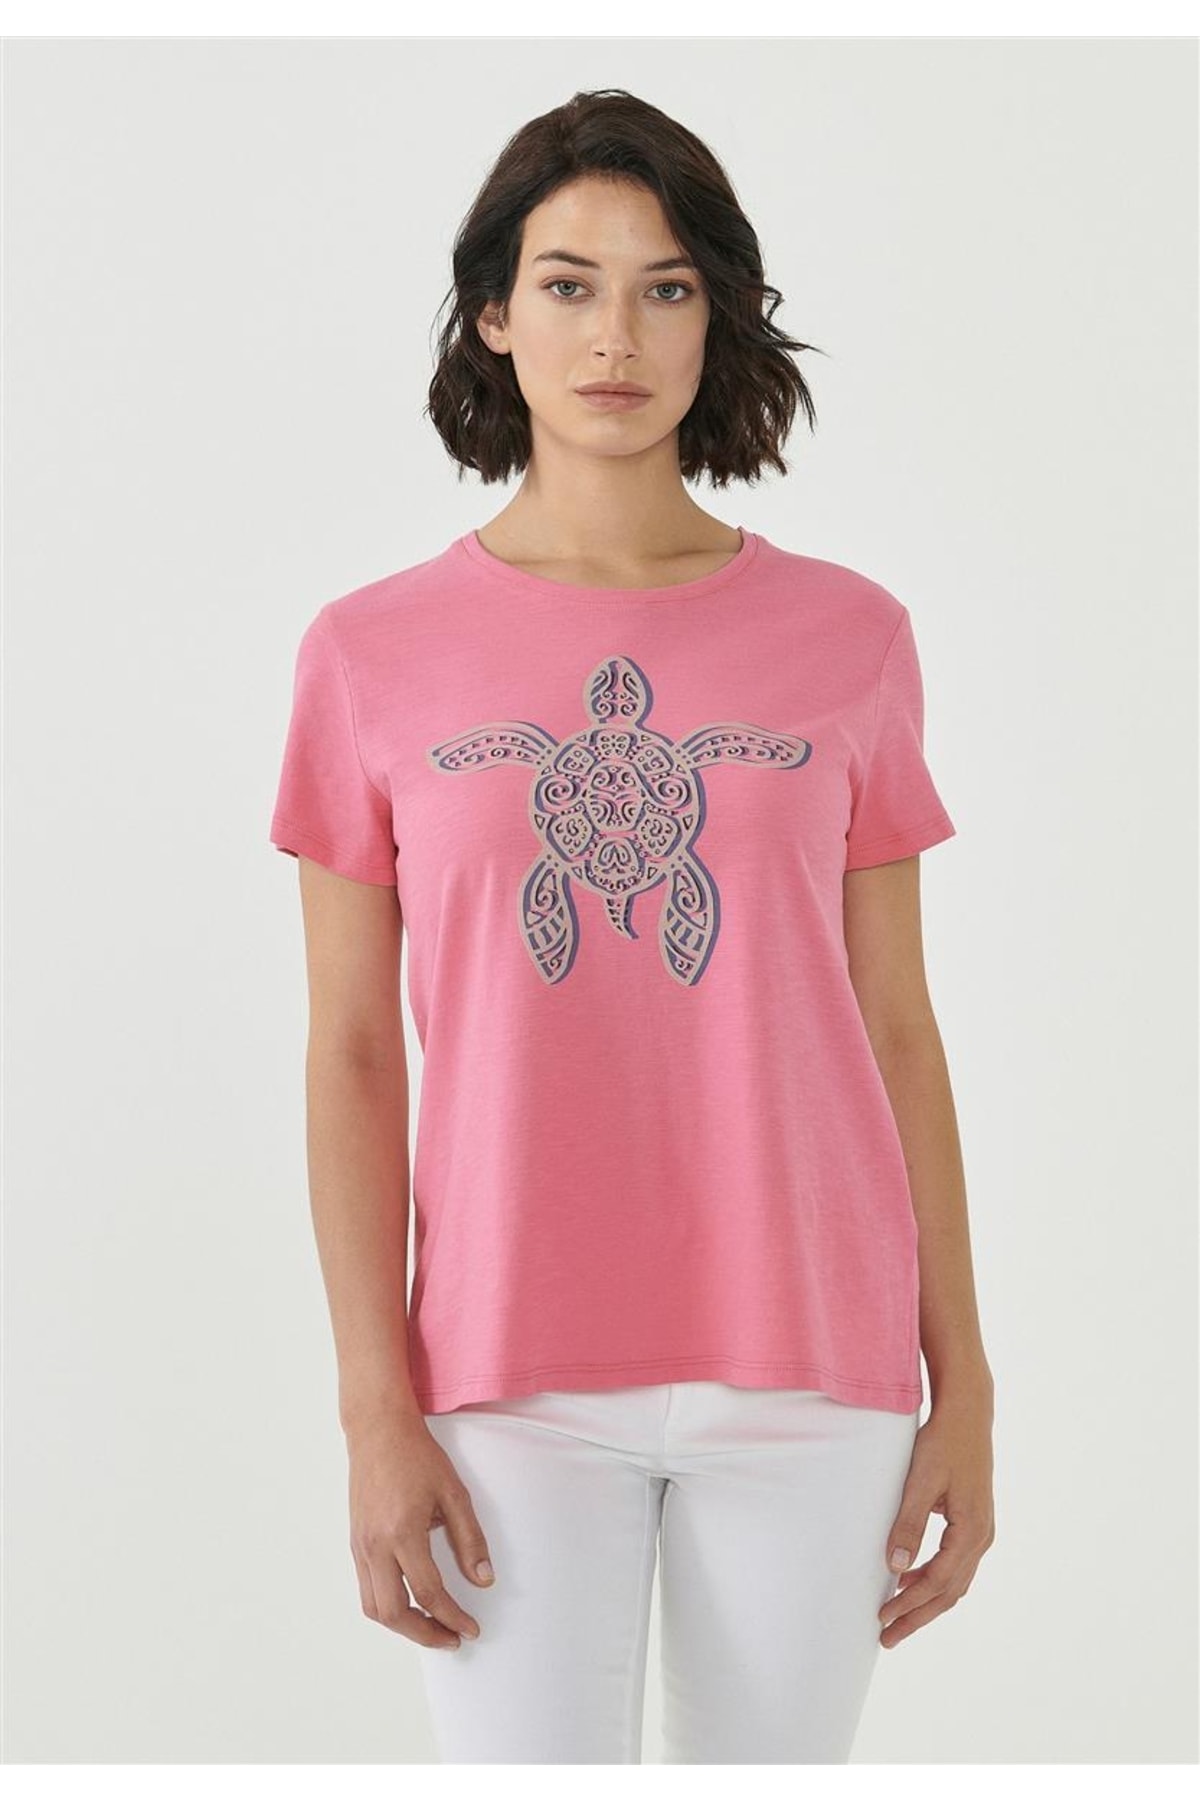 ORGANICATION T-Shirt Rosa Figurbetont Fast ausverkauft